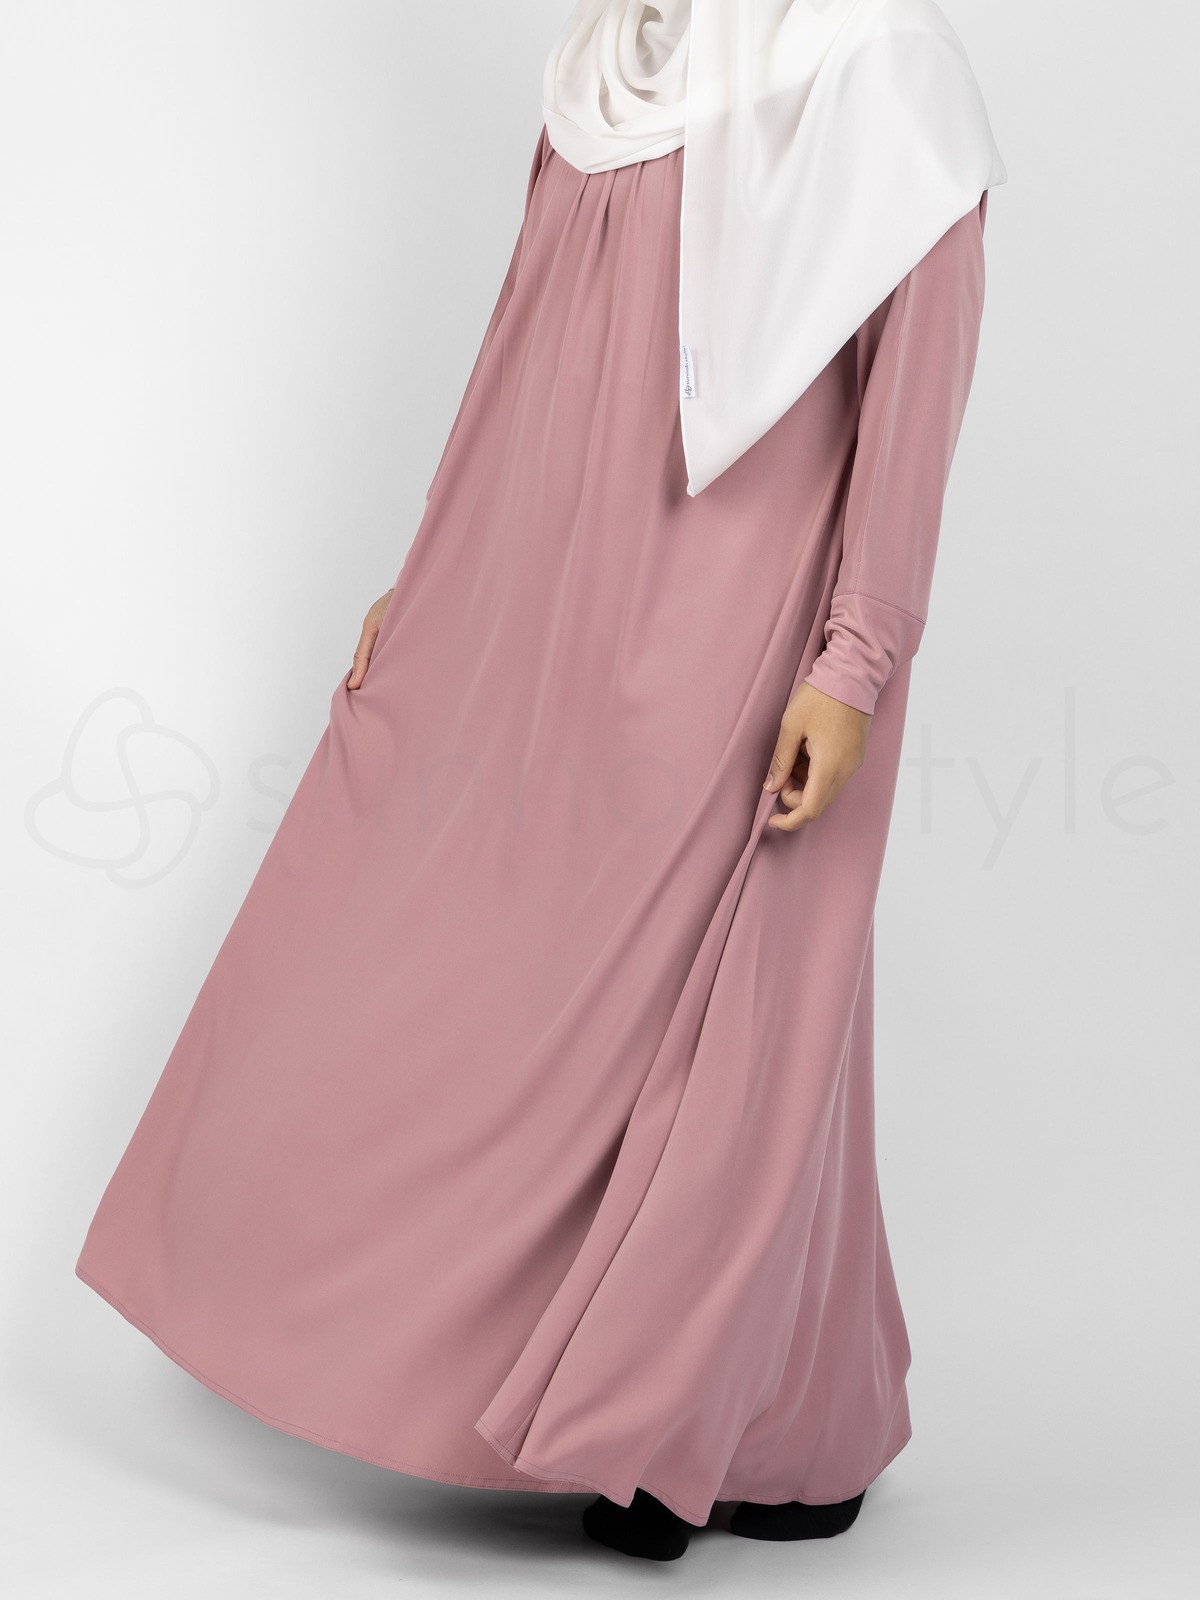 Sunnah Style - Simplicity Umbrella Abaya (Dusty Rose)